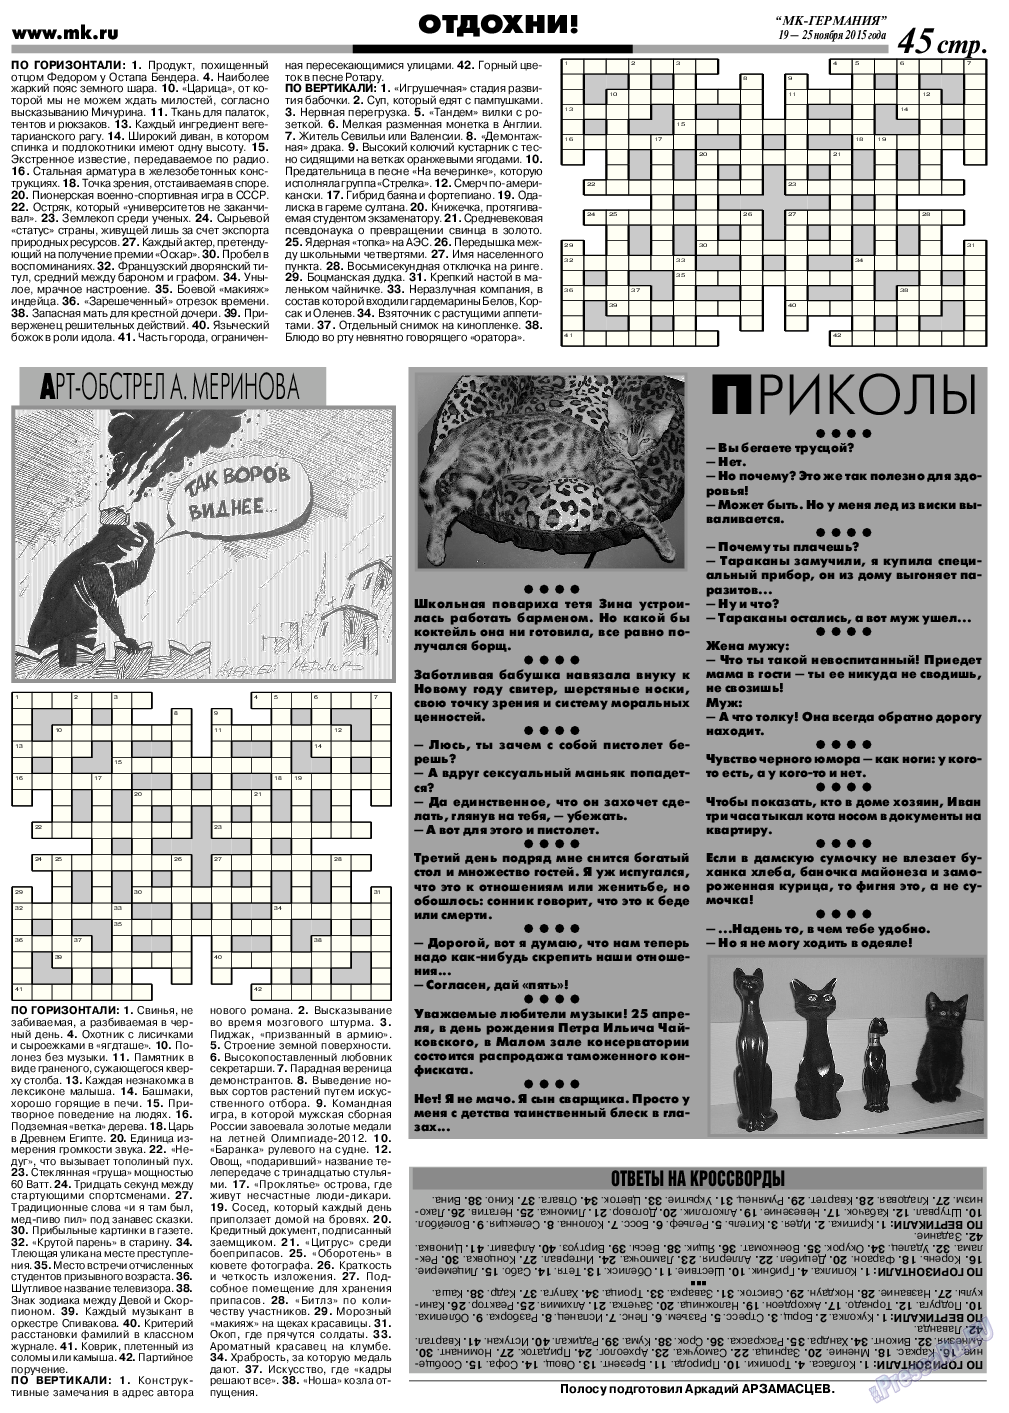 МК-Германия, газета. 2015 №47 стр.45